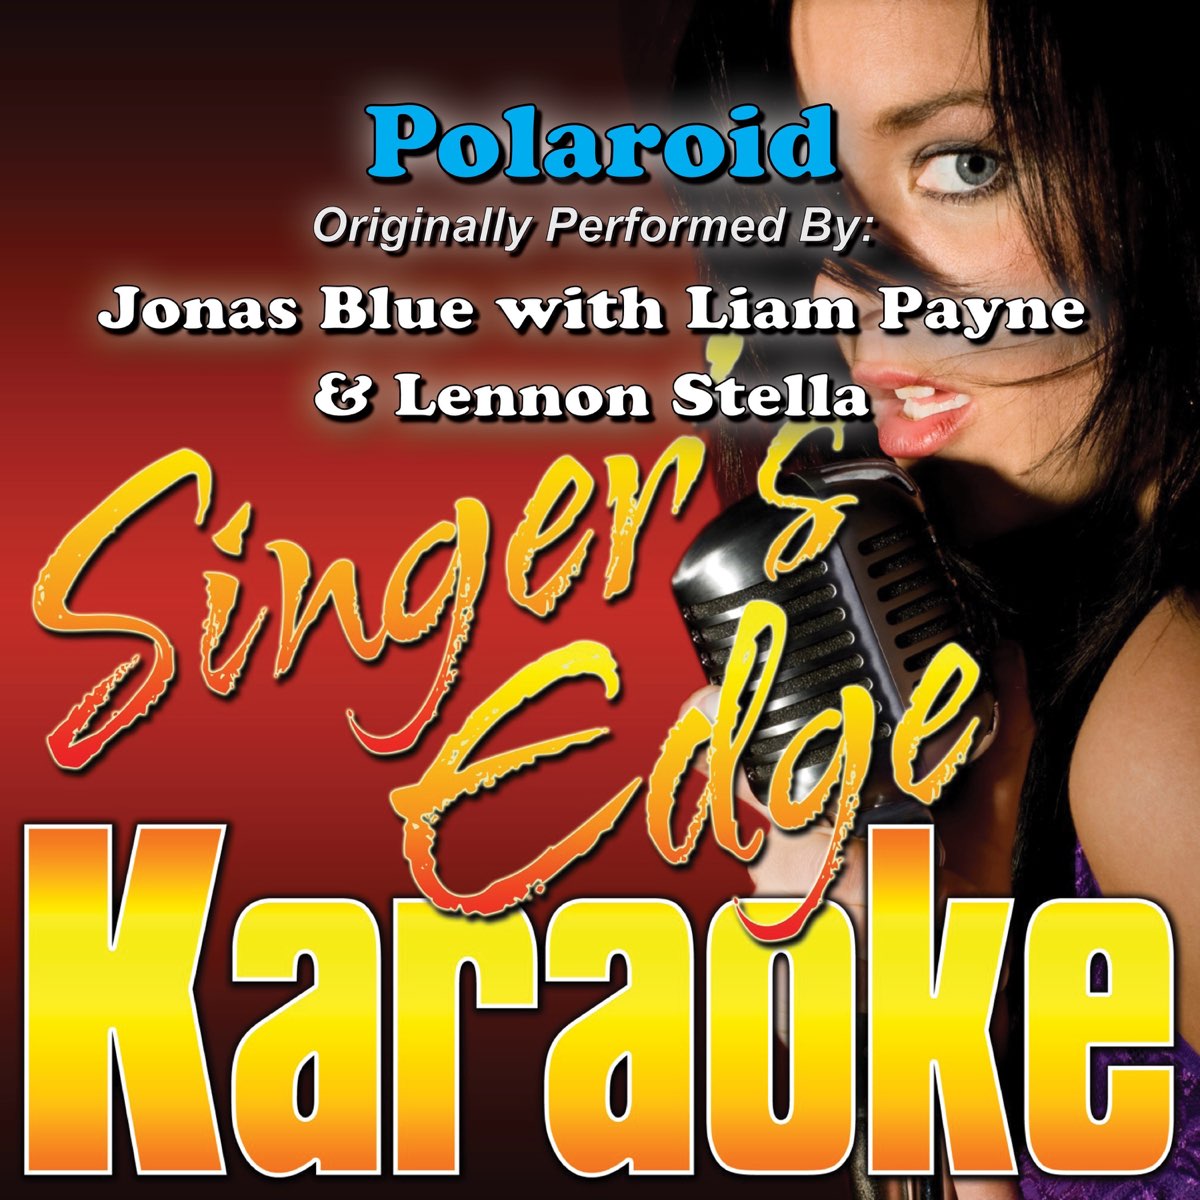 Polaroid (Originally Performed By Jonas Blue with Liam Payne & Lennon Stella)  [Karaoke Version] - Single de Singer's Edge Karaoke en Apple Music